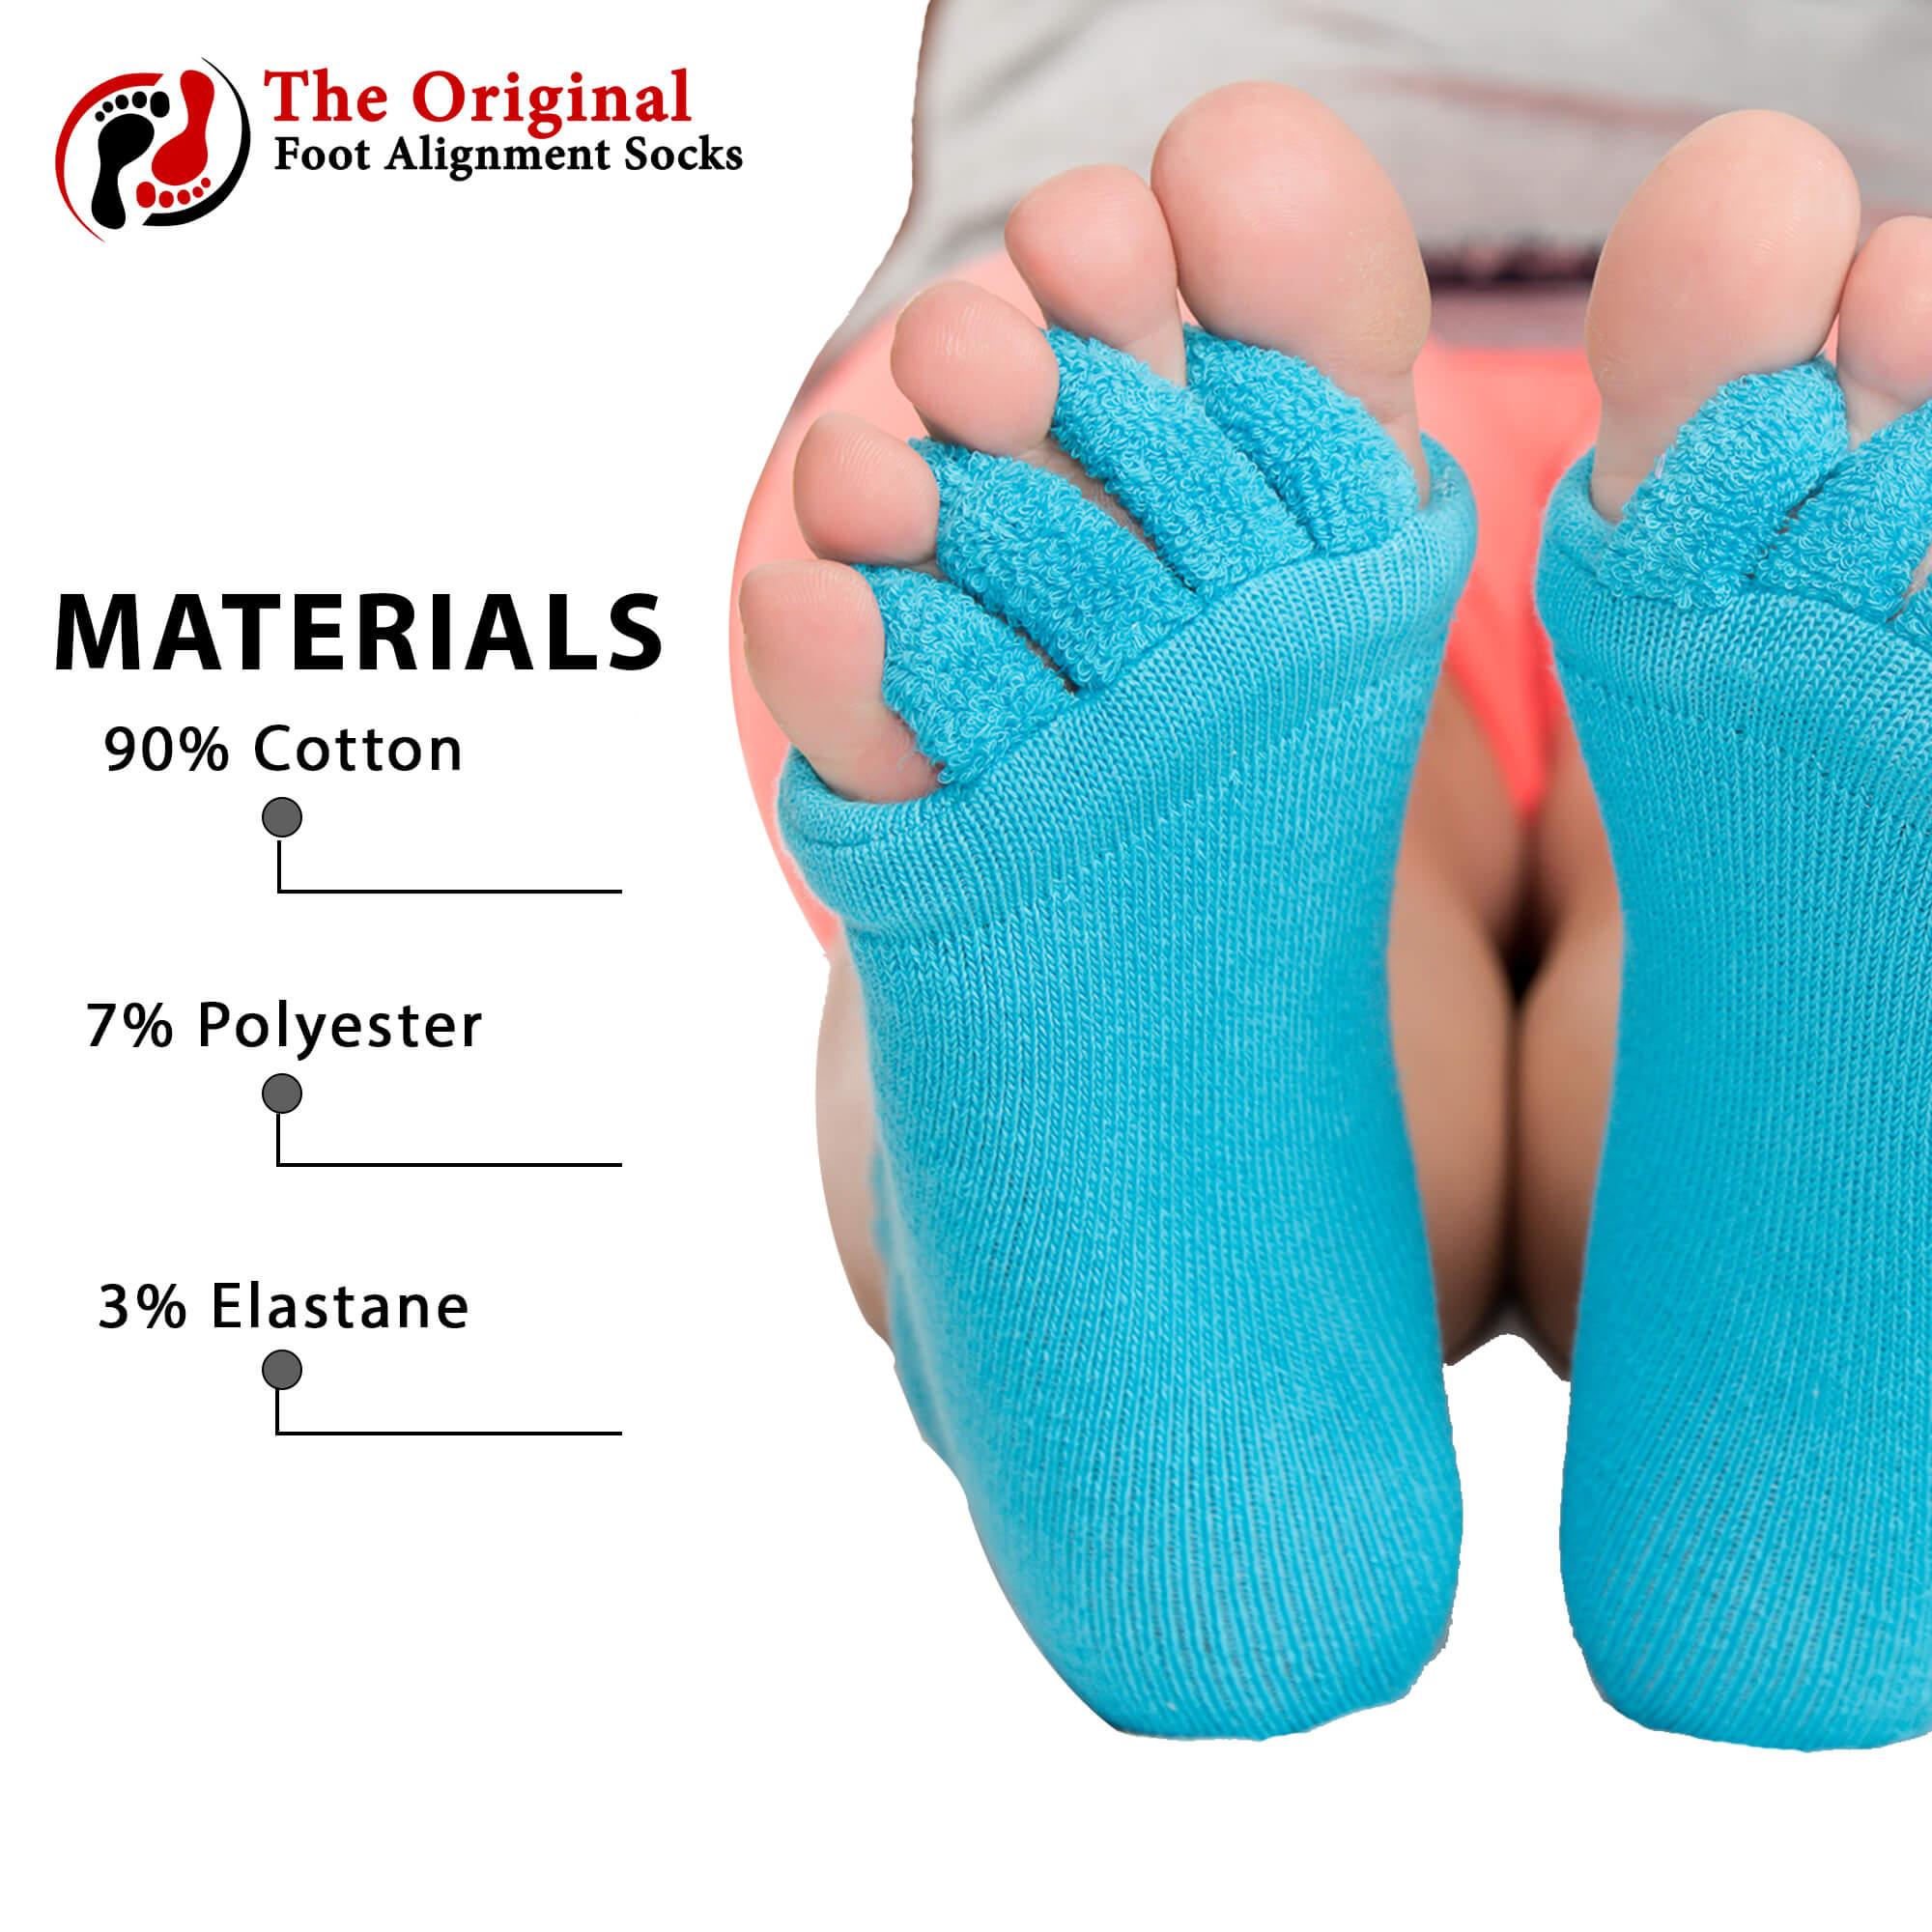 Bunion Relief – My-Happy Feet - The Original Foot Alignment Socks